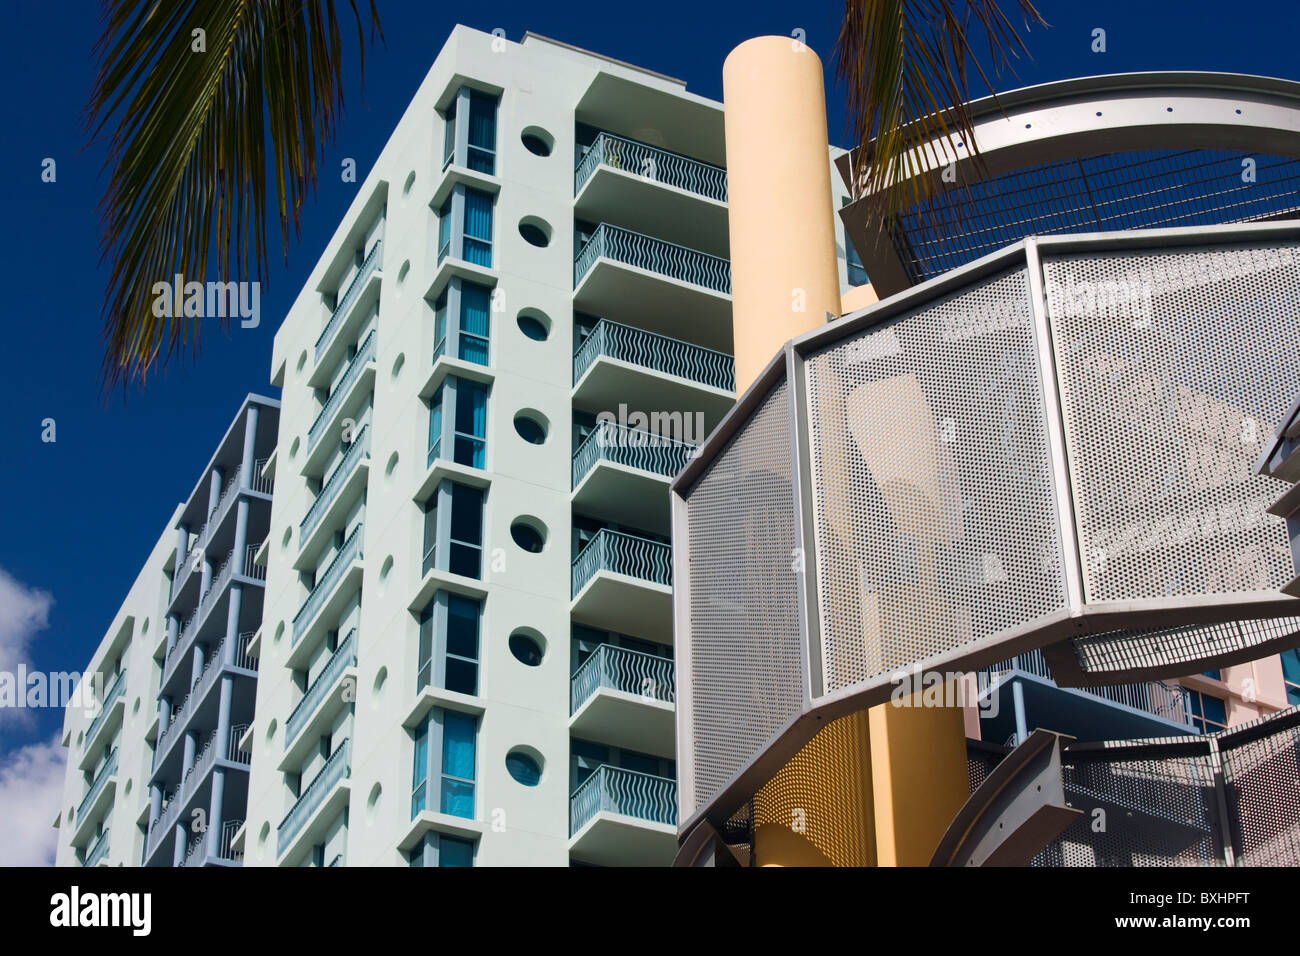 Art deco architecture, in pastel colors, high rise apartment blocks Ocean Drive, South Beach, Miami, Florida, USA Stock Photo